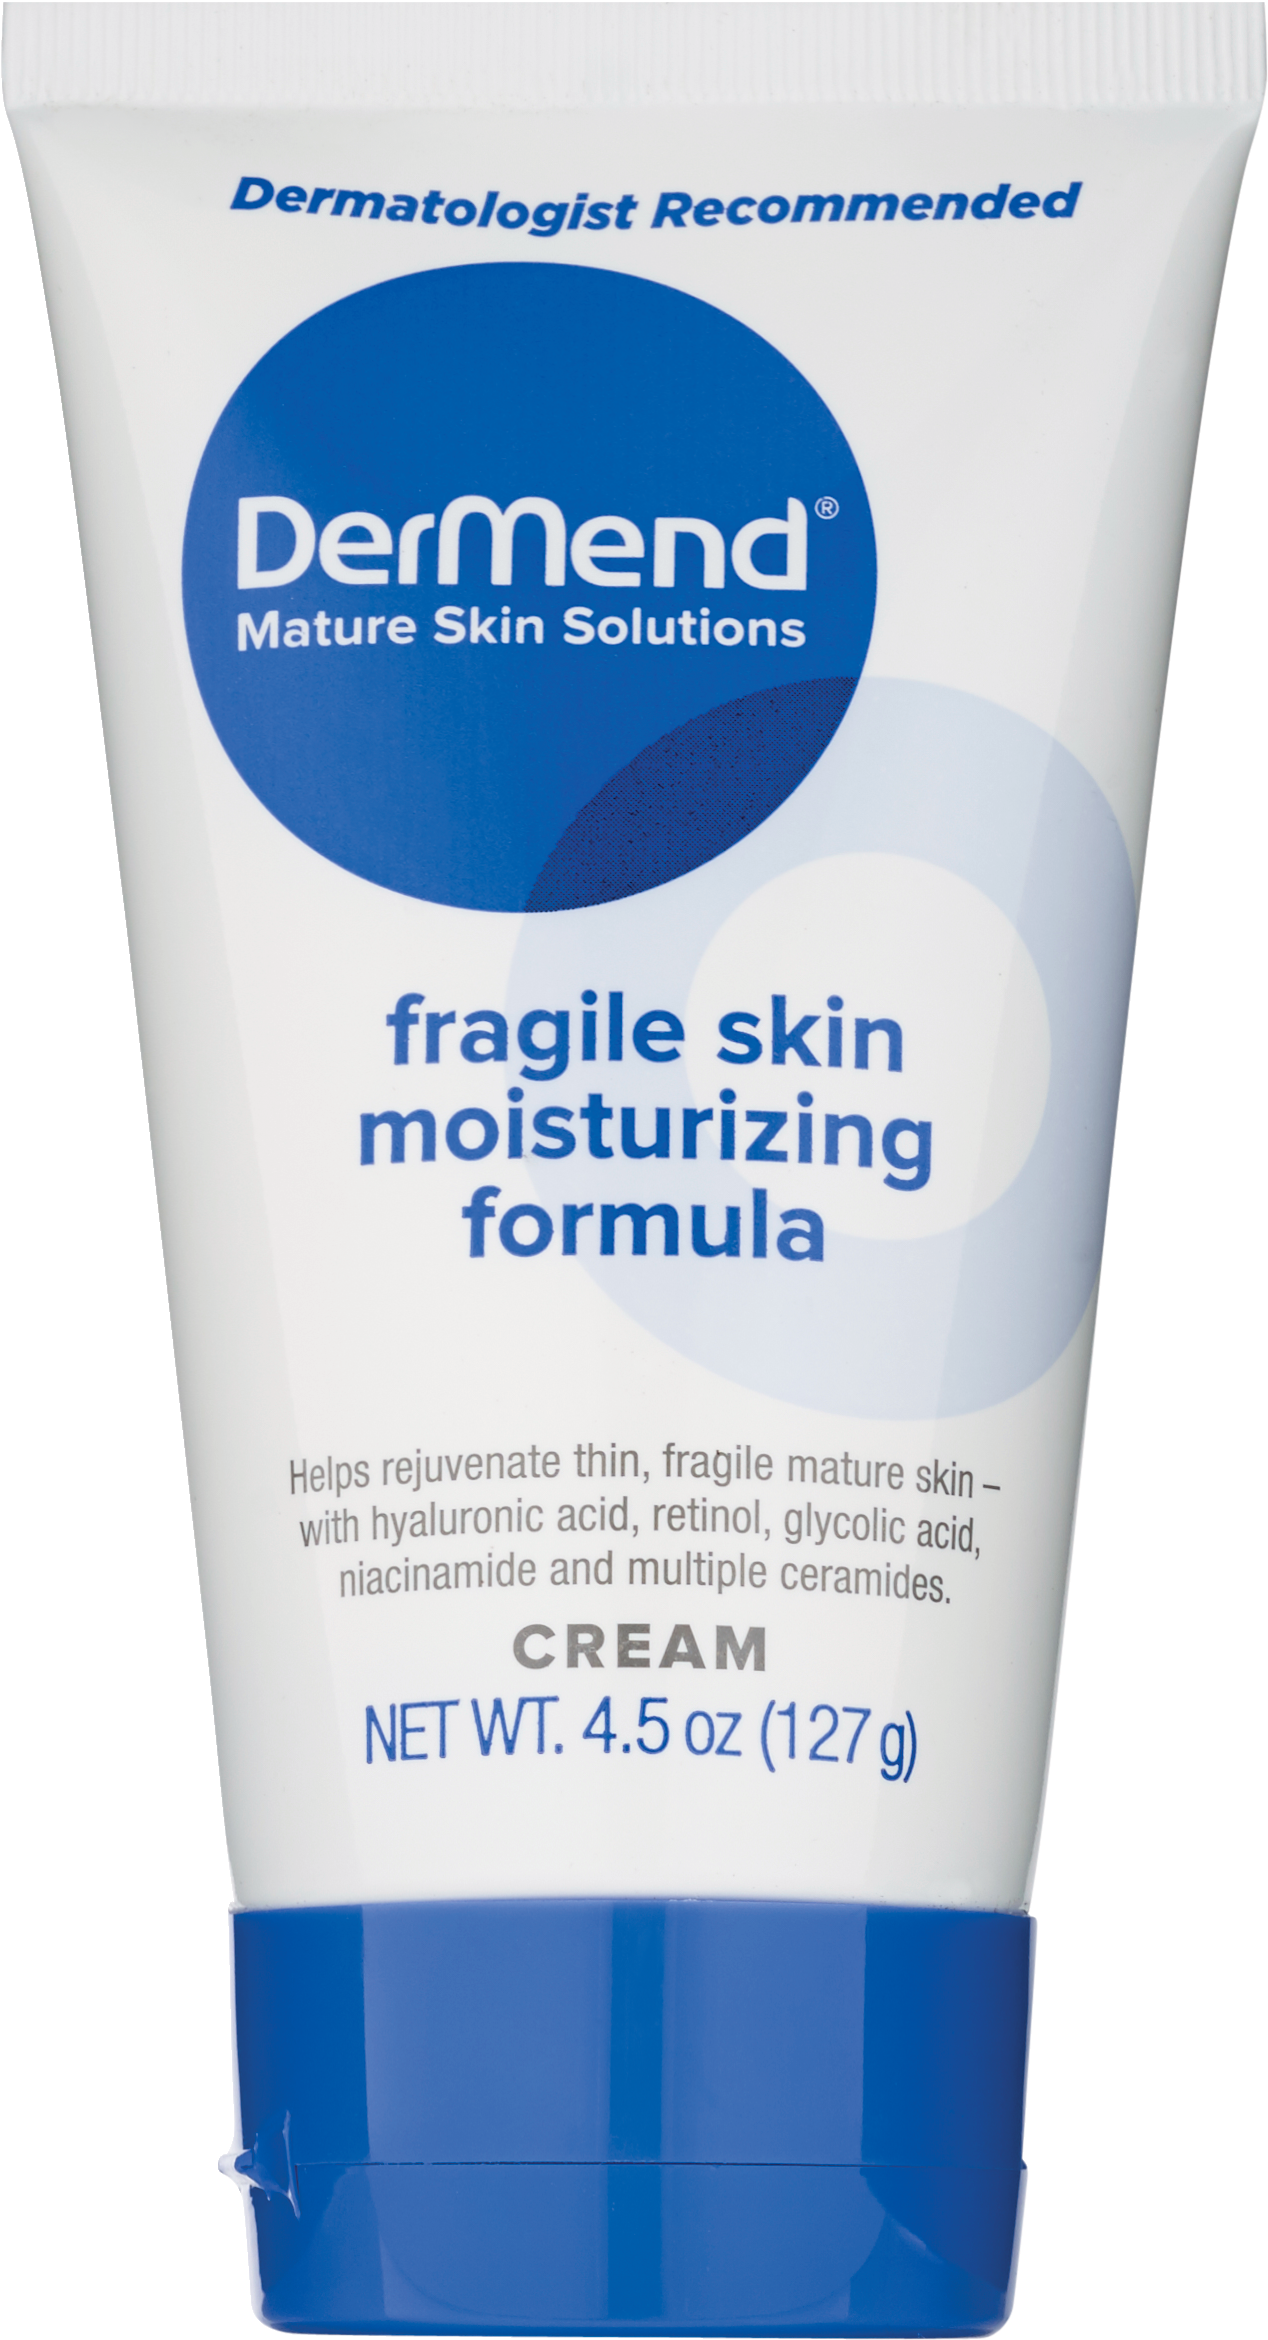 Dermend Mature Skin Solutions Fragile Skin Moisturizing Formula Cream, 4.5 OZ